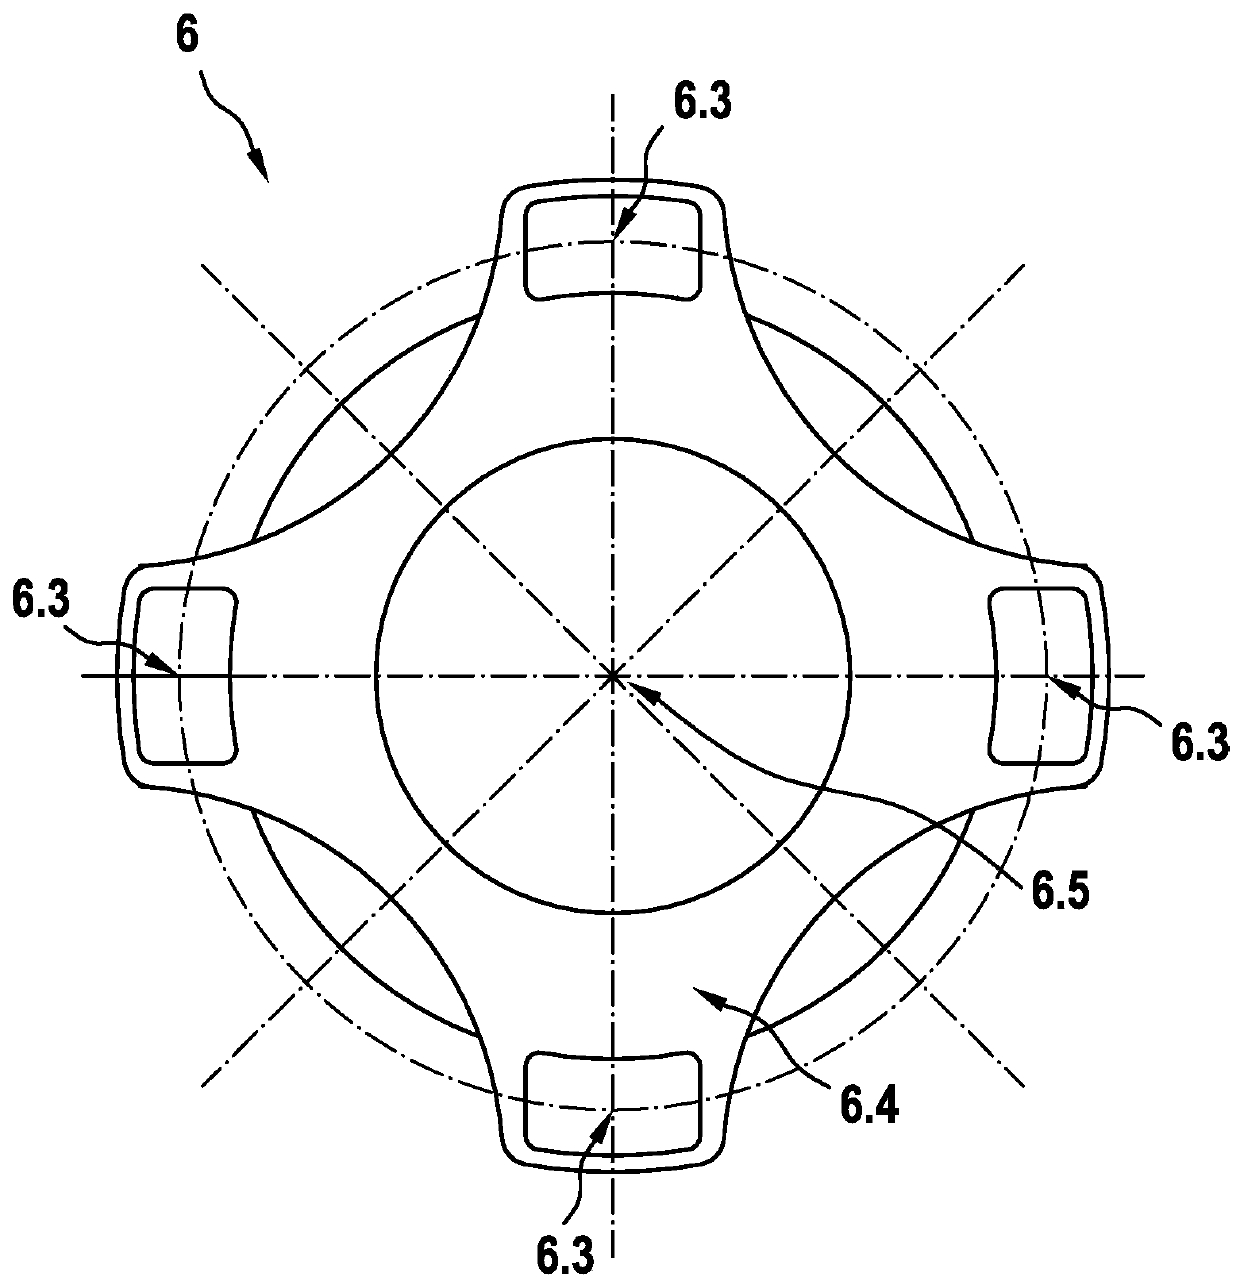 Solenoid valve for controlling the brake pressure of a wheel brake